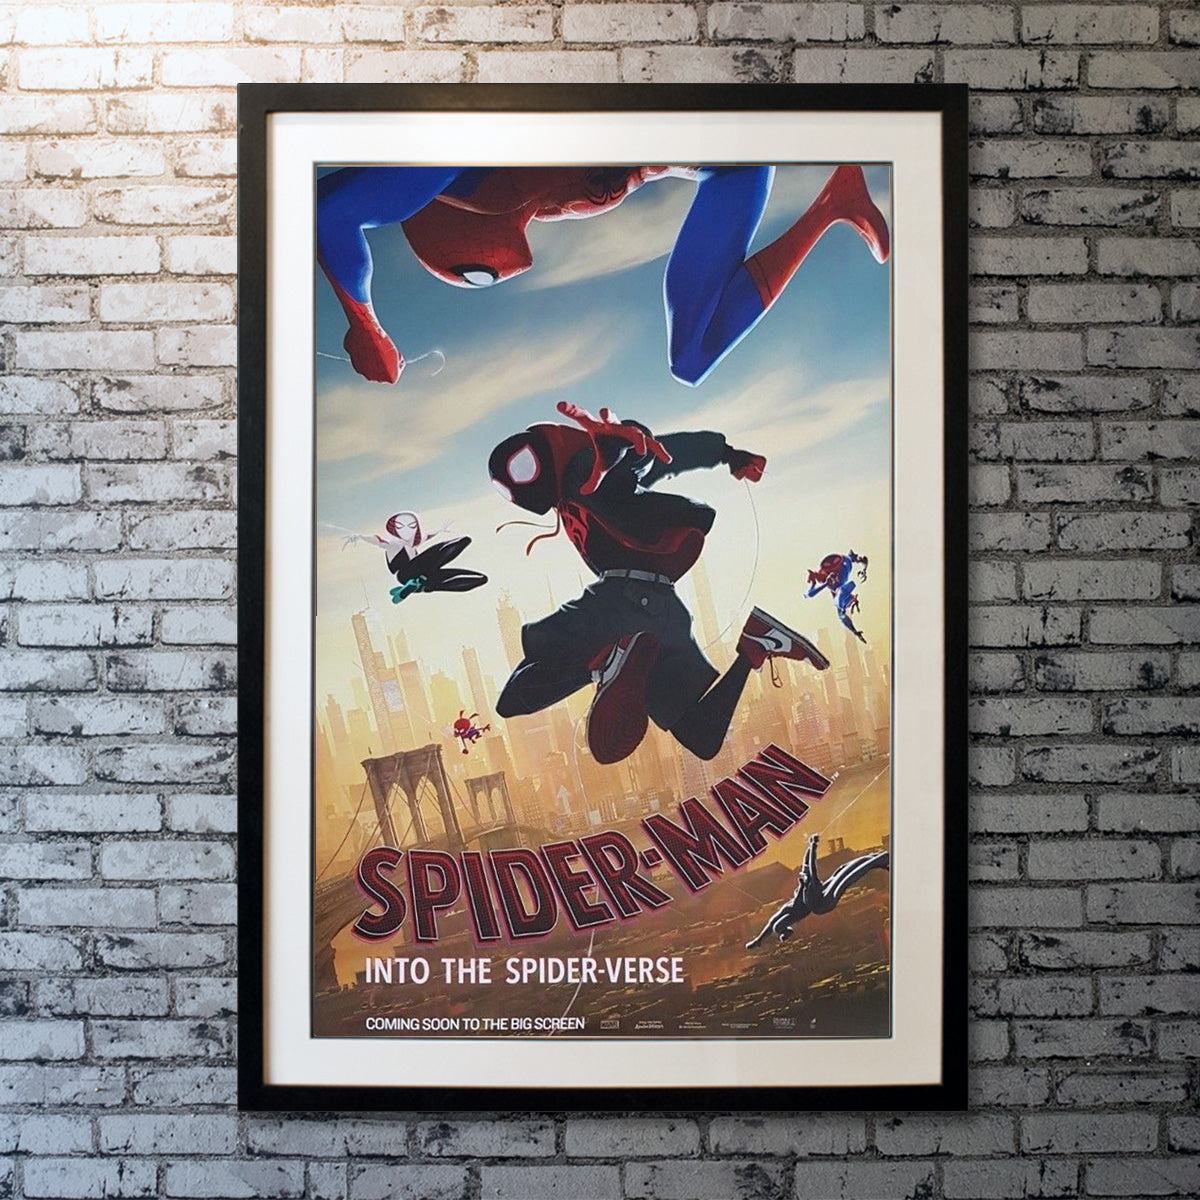 Original Movie Poster of Spider-man: Into The Spider-verse (2018)